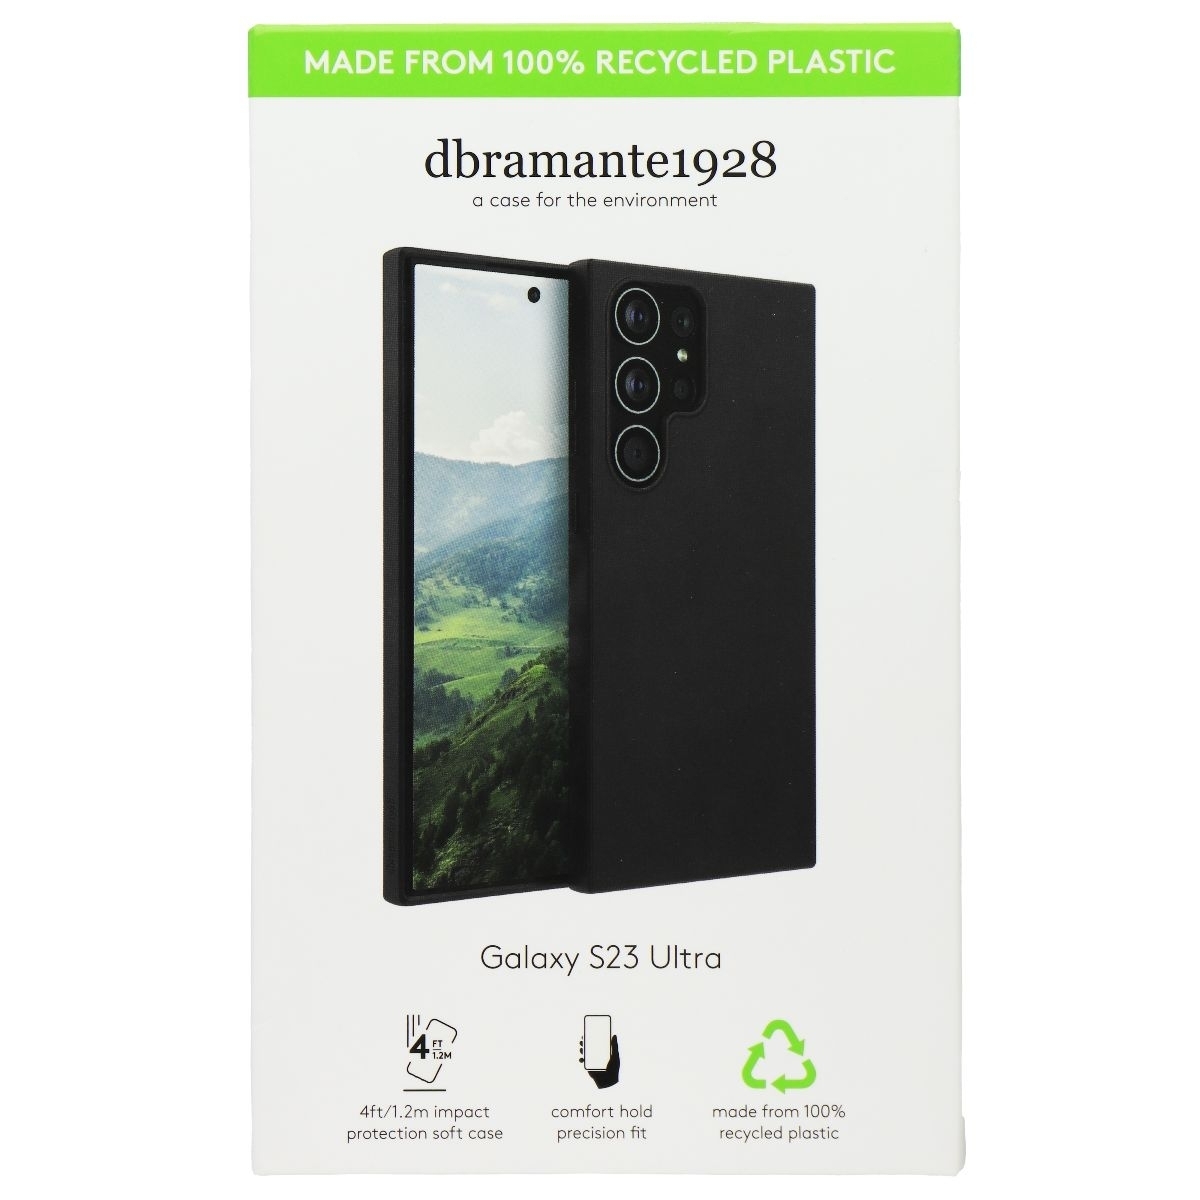 Dbramante1928 Phone Case For Samsung Galaxy S23 Ultra - Black (Refurbished)